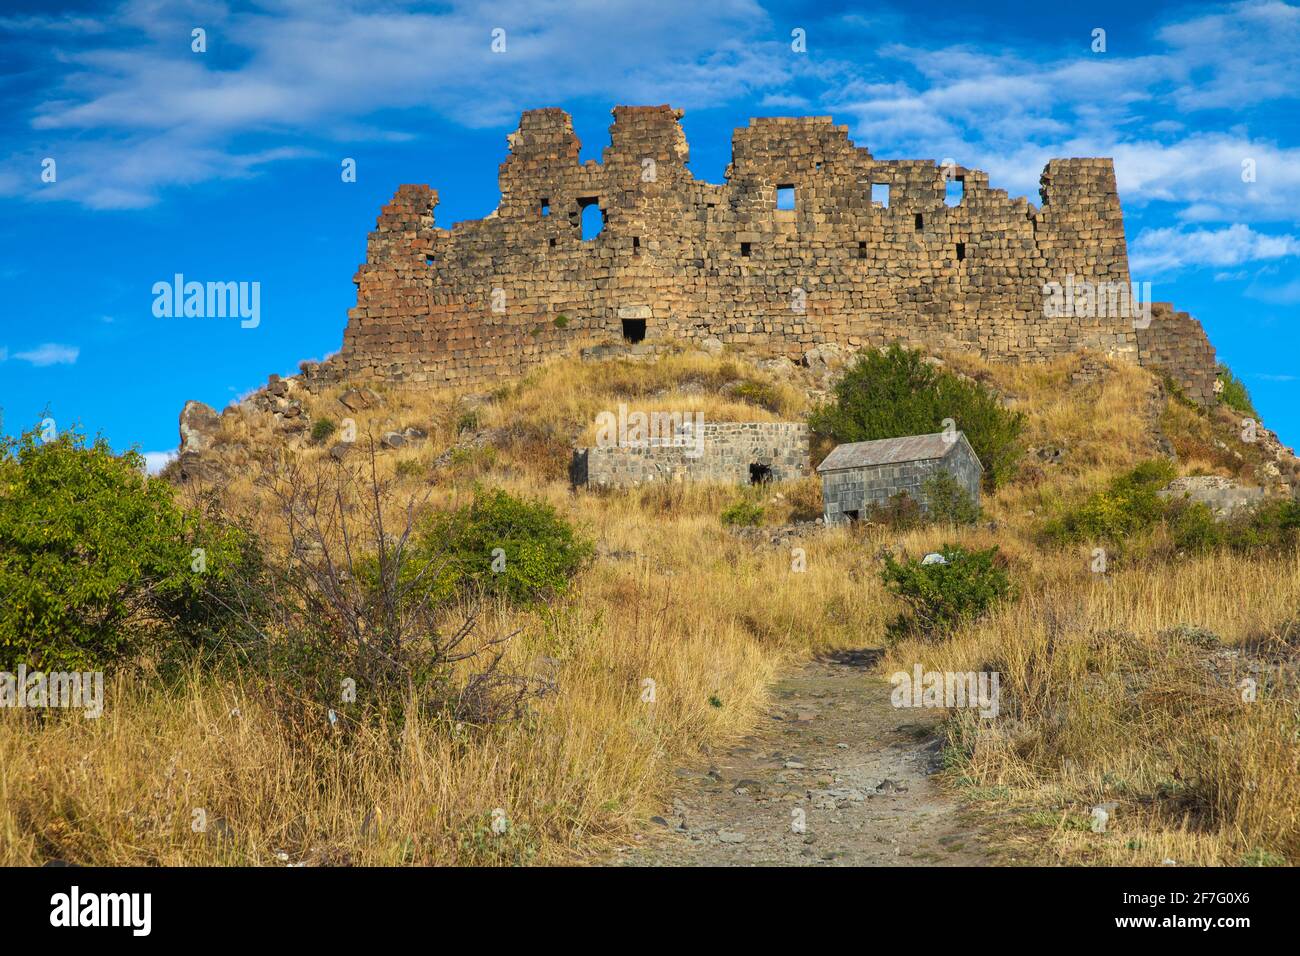 Armenia, Aragatsotn, Ereván, Amberd fortaleza situada en las laderas del Monte Aragat Foto de stock